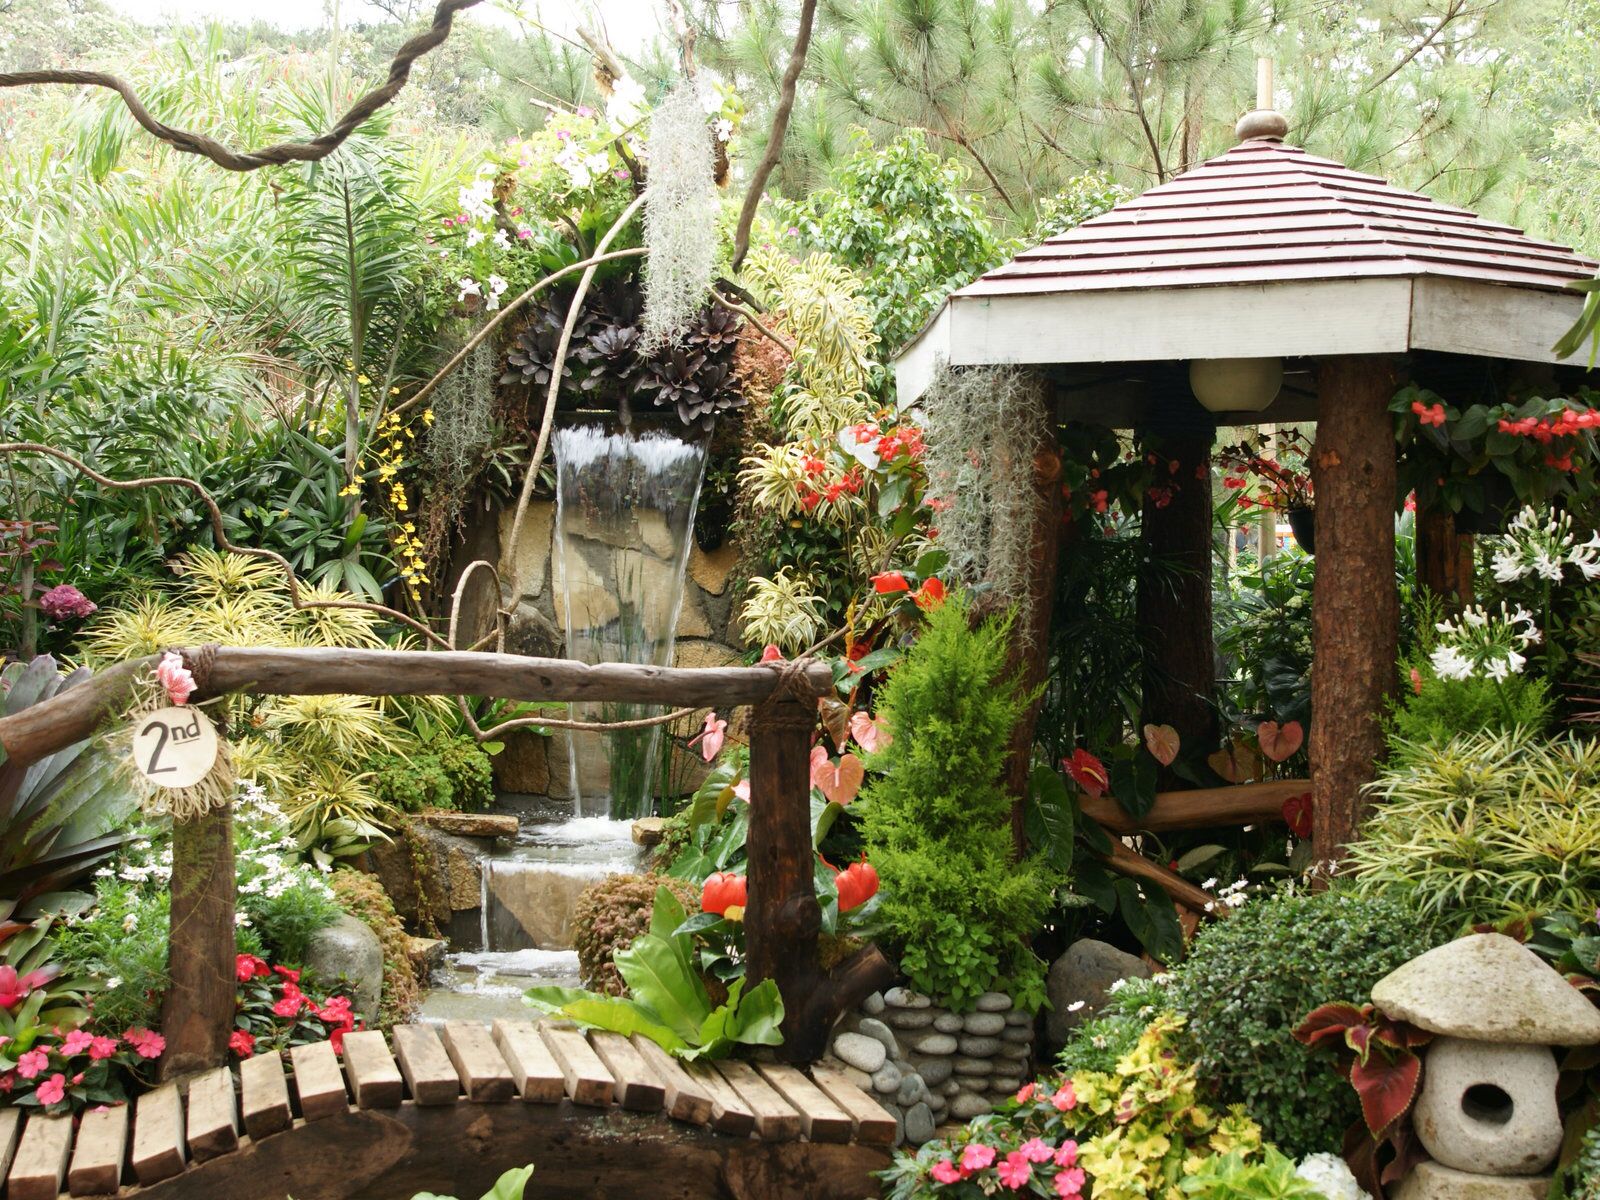 Hardscape in Tropical Garden | Tropical Garden | Pinterest ...